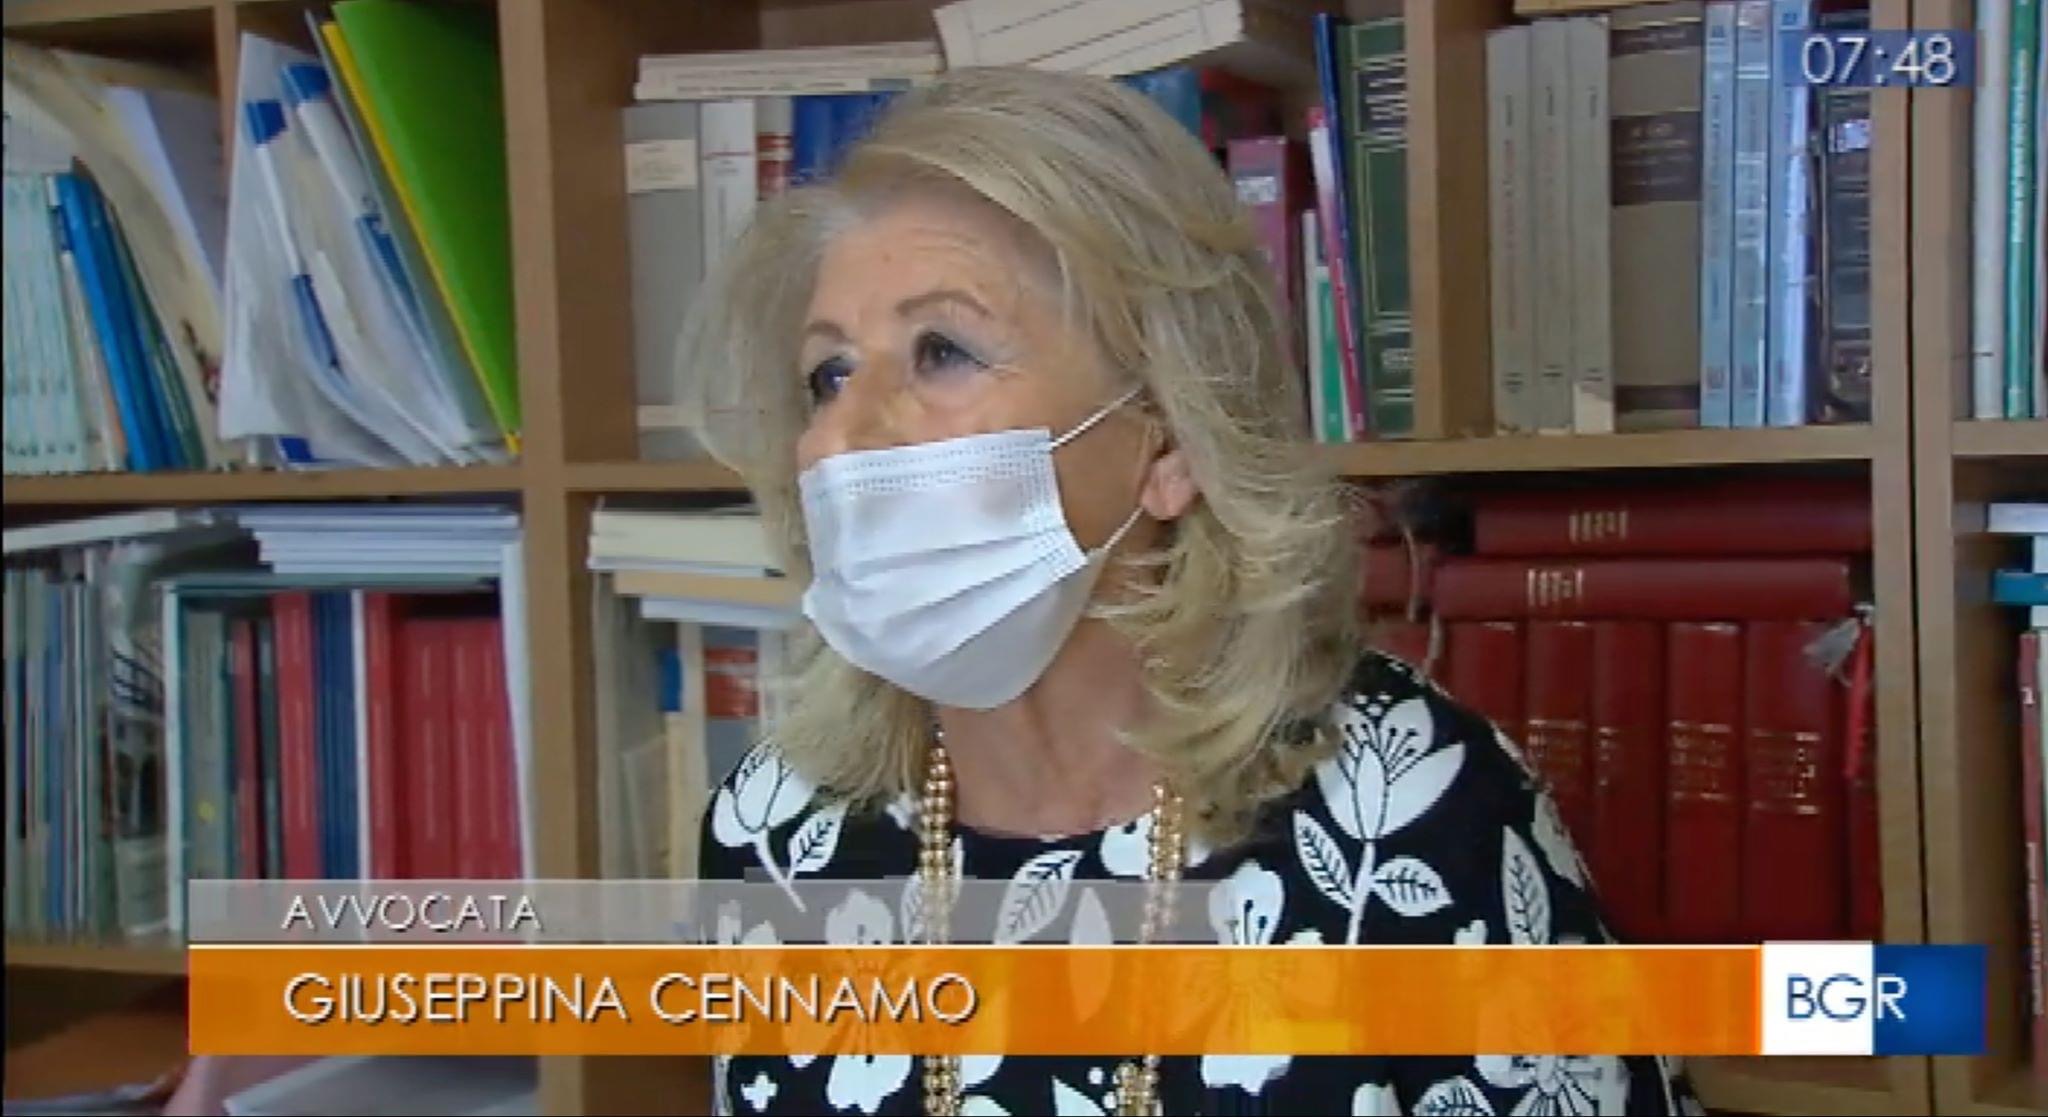 Pina Cennamo interviewed regarding